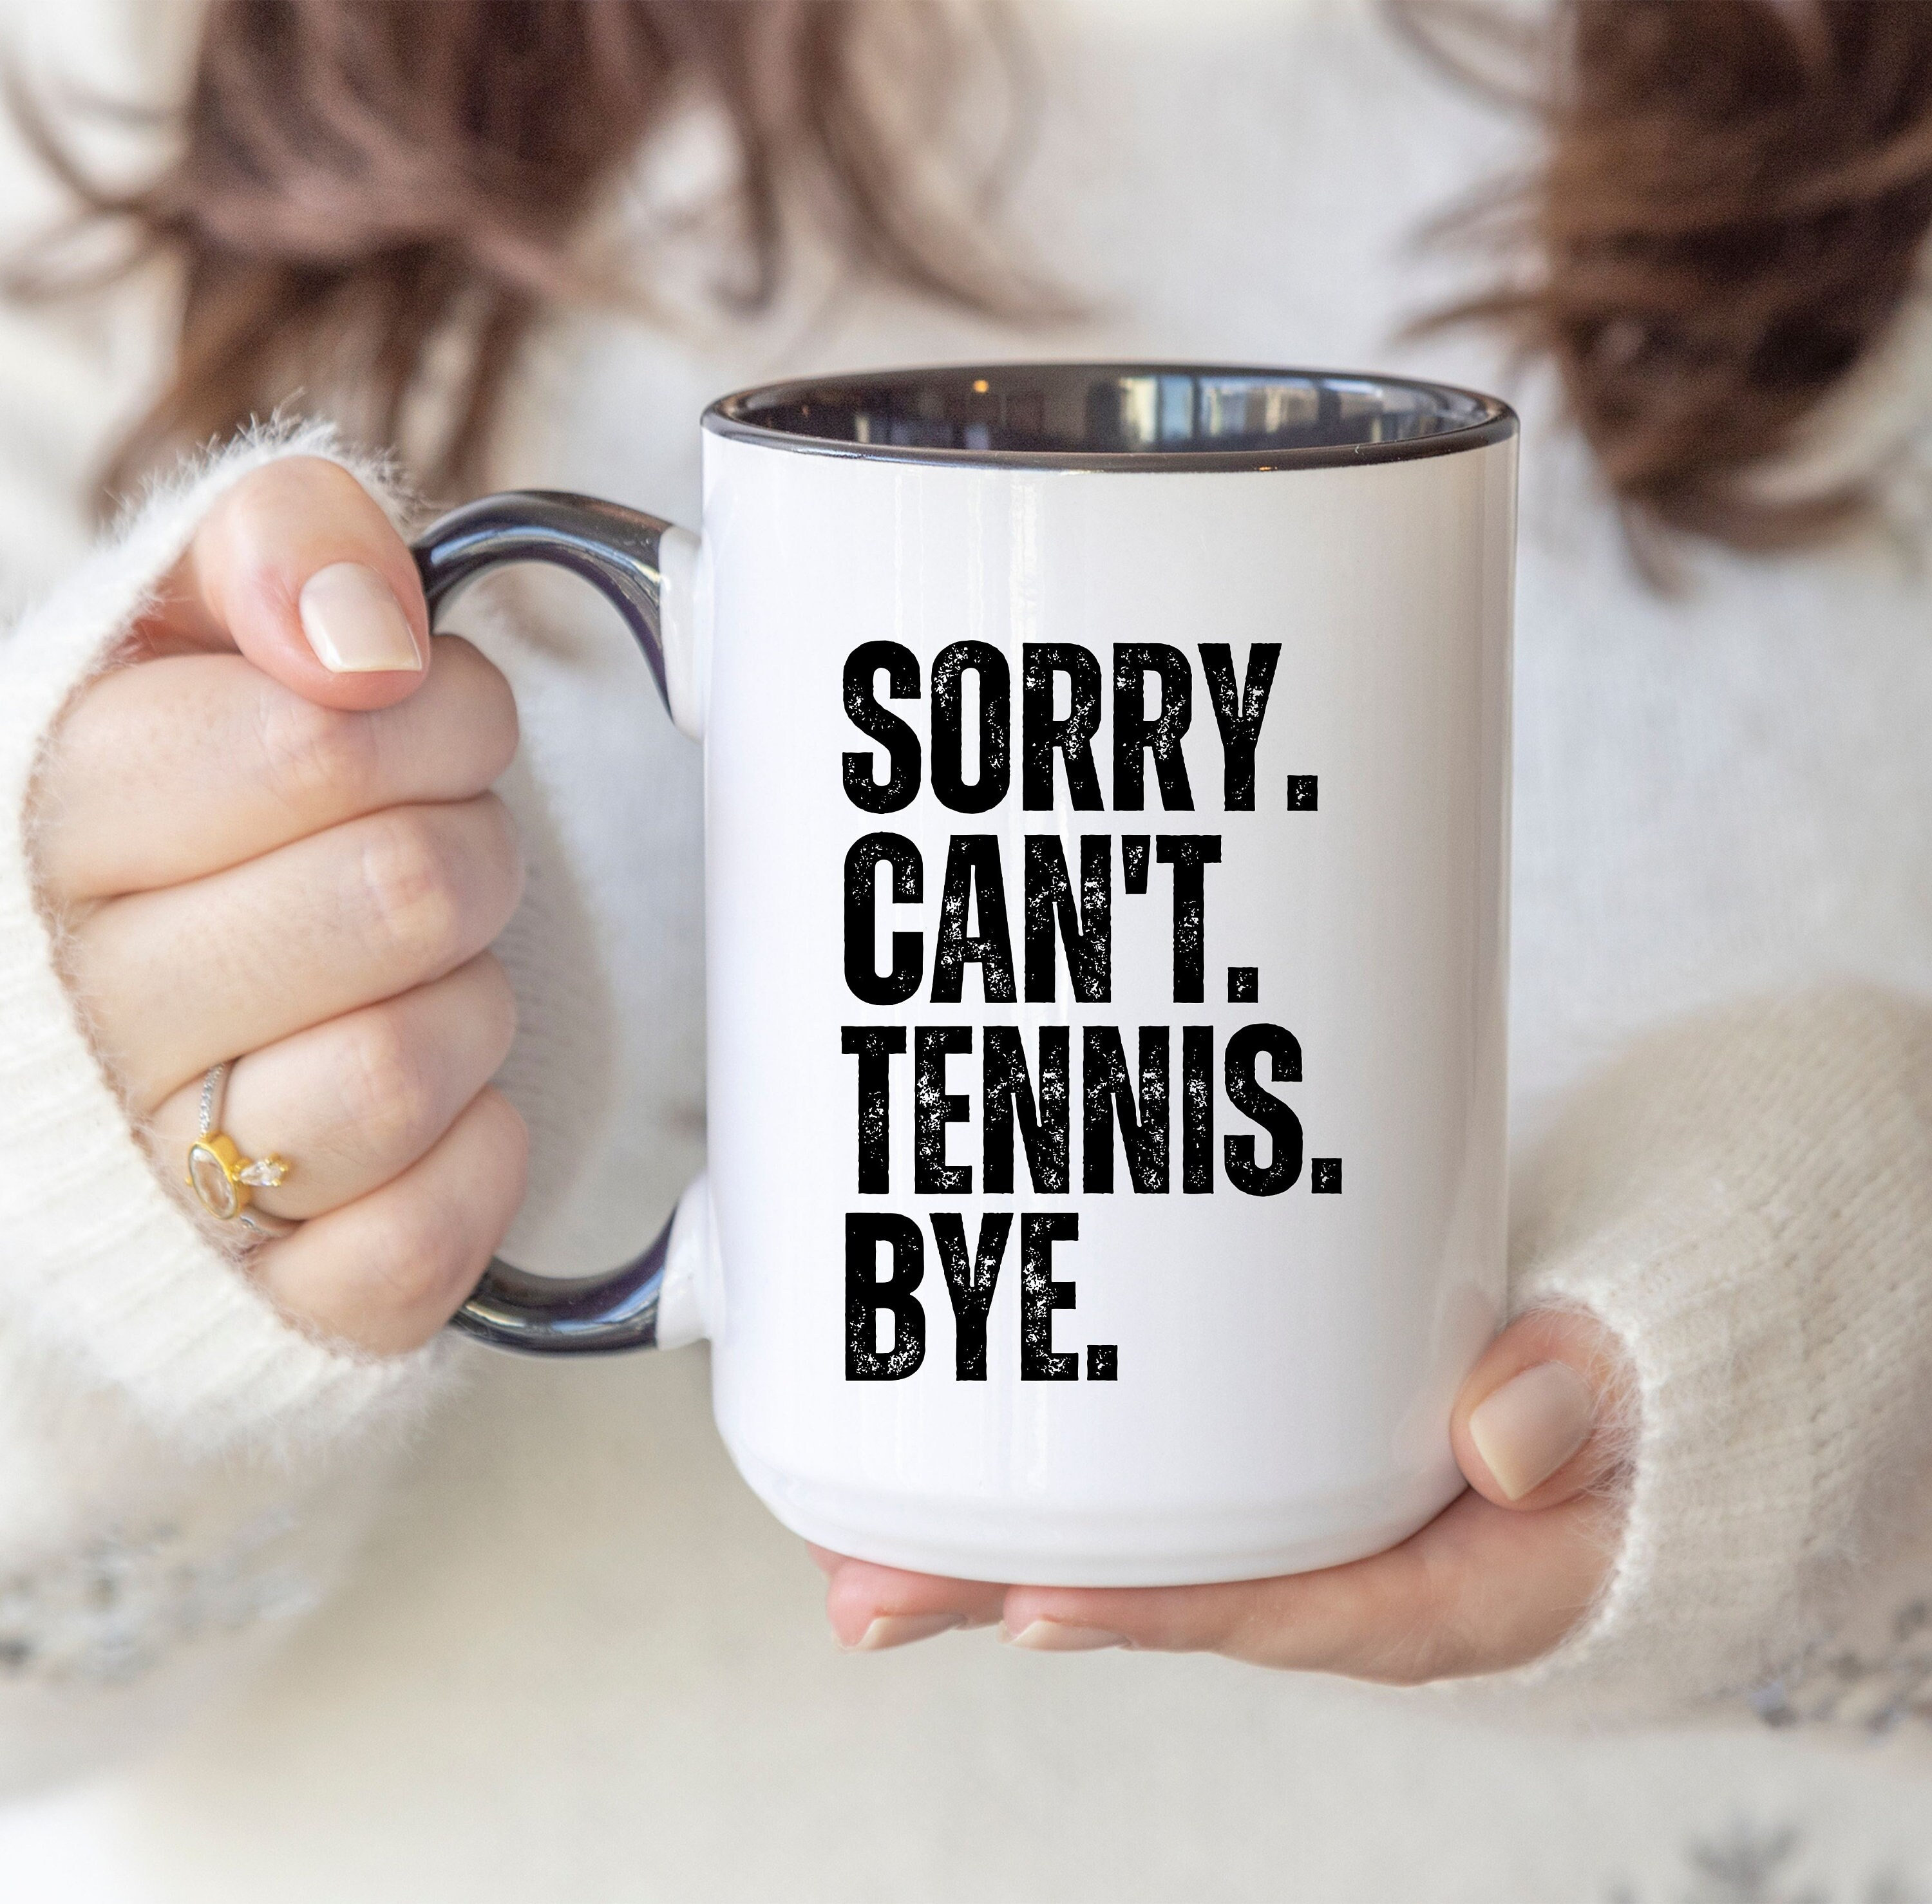 Large Coffee Mug I Beat At Tennis Funny Tennis Themed Mug - Temu